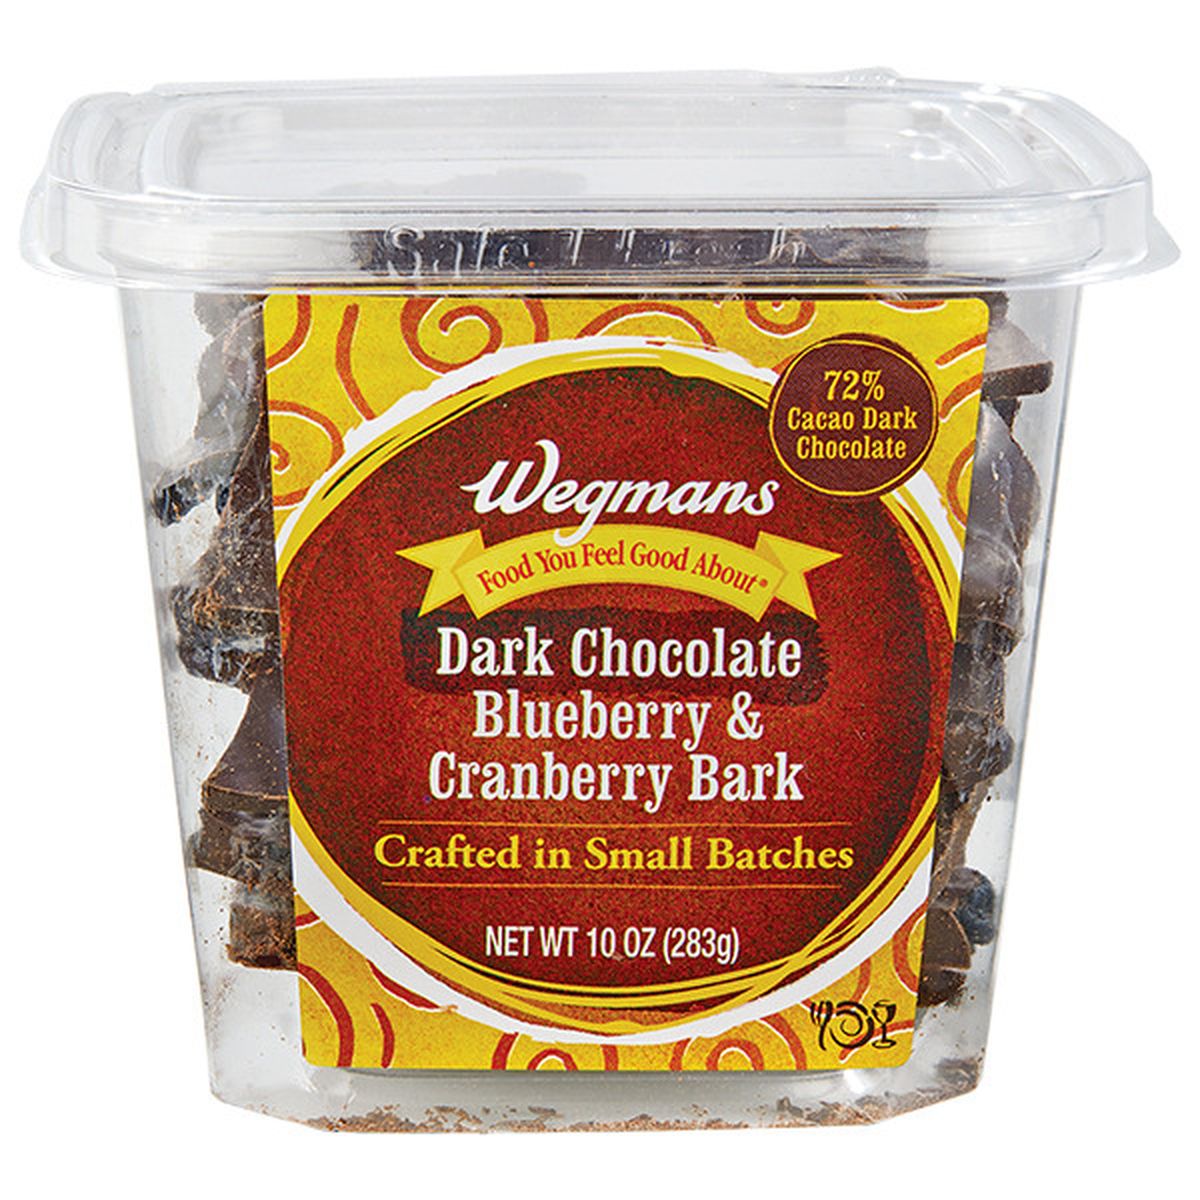 Calories in Wegmans Dark Chocolate Blueberry & Cranberry Bark